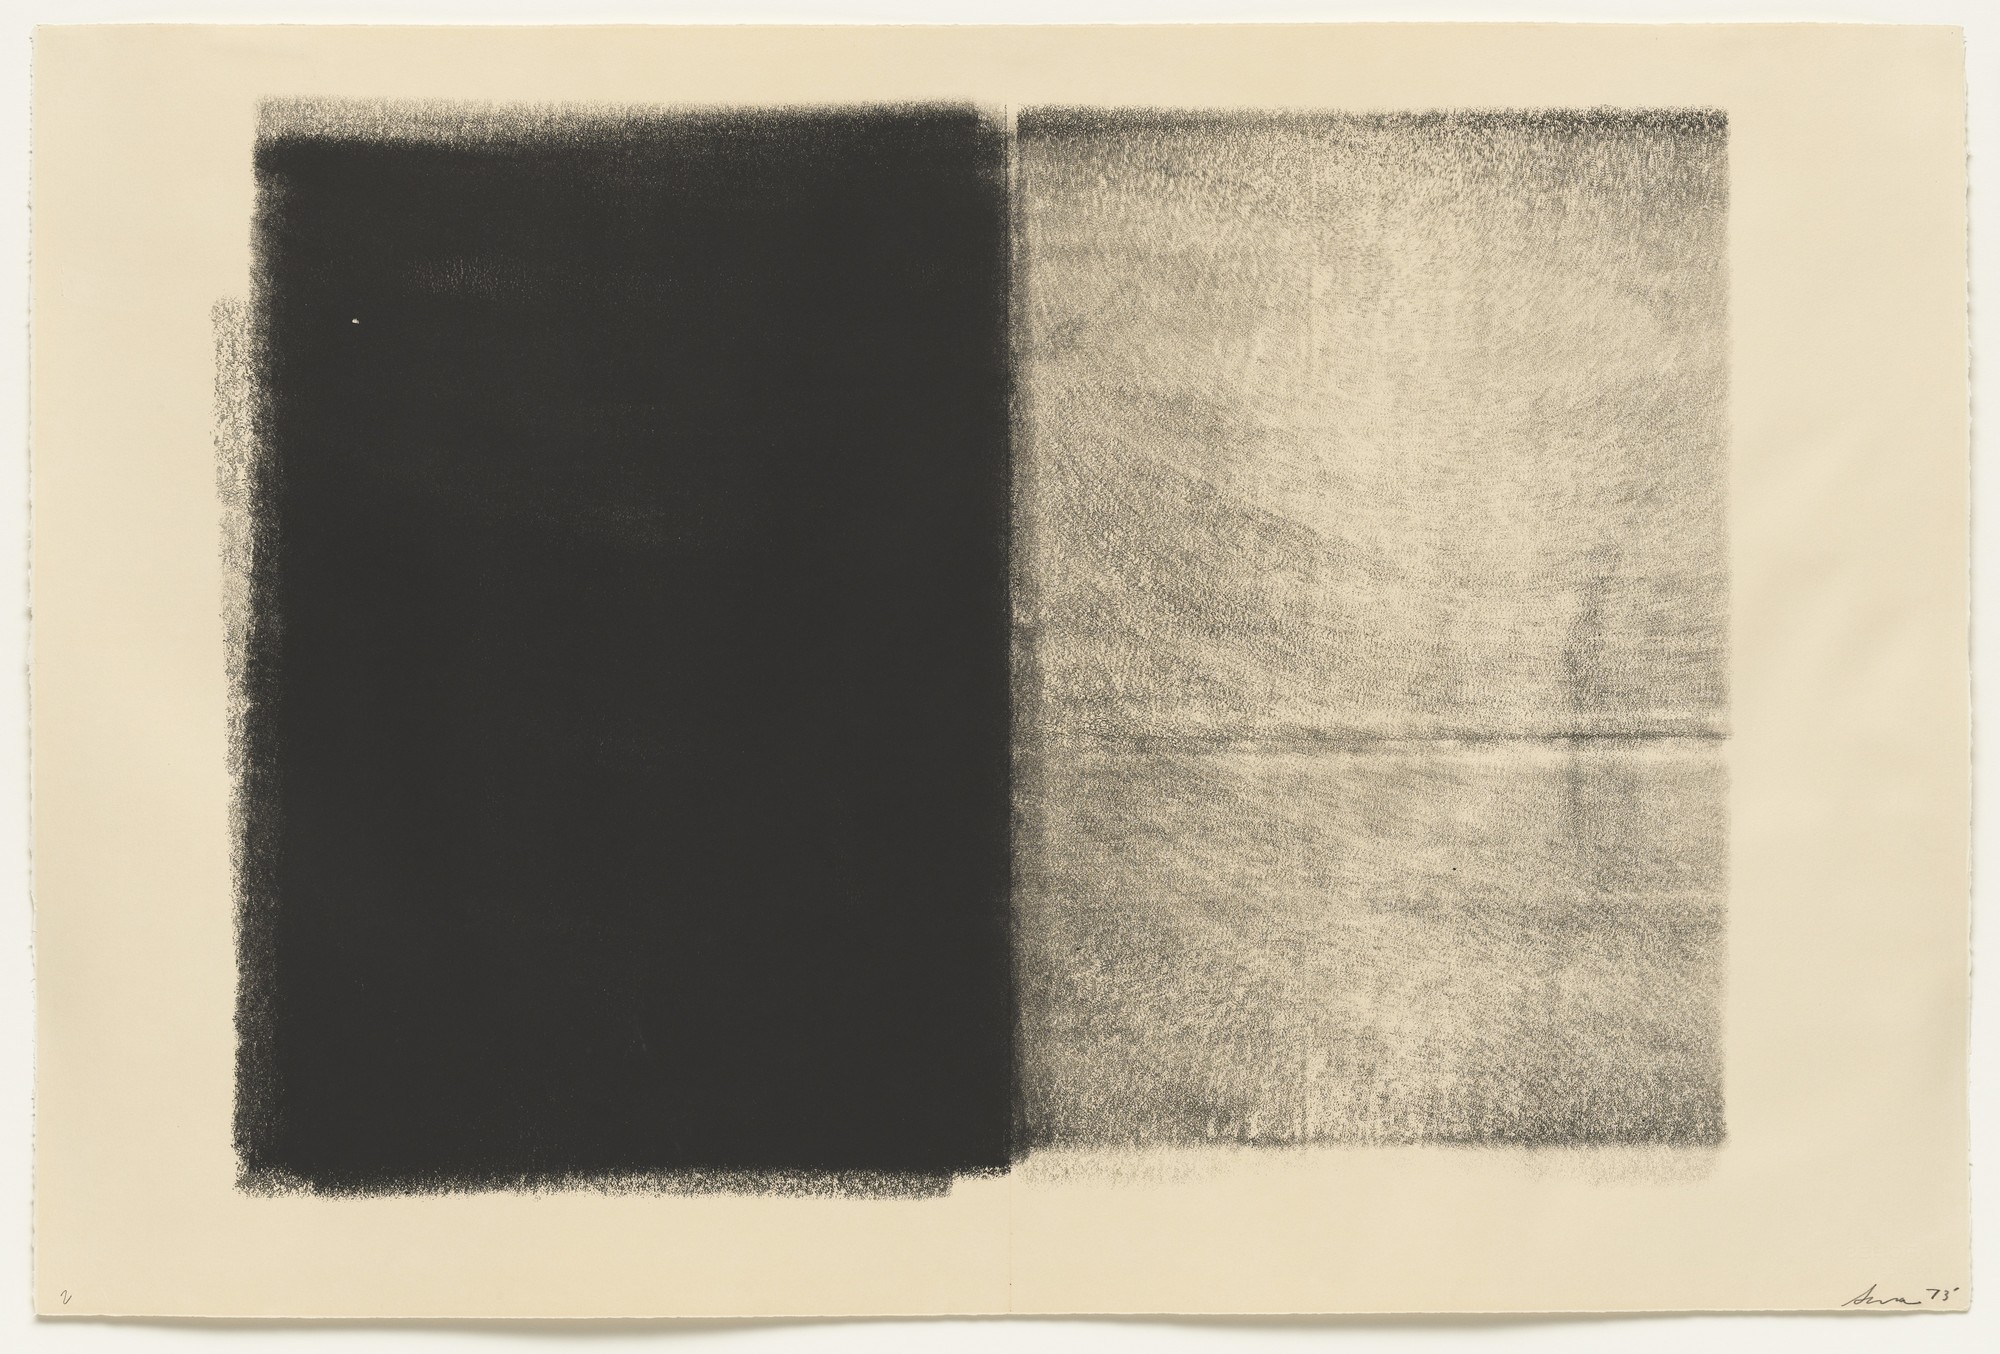 Richard Serra’s illusions